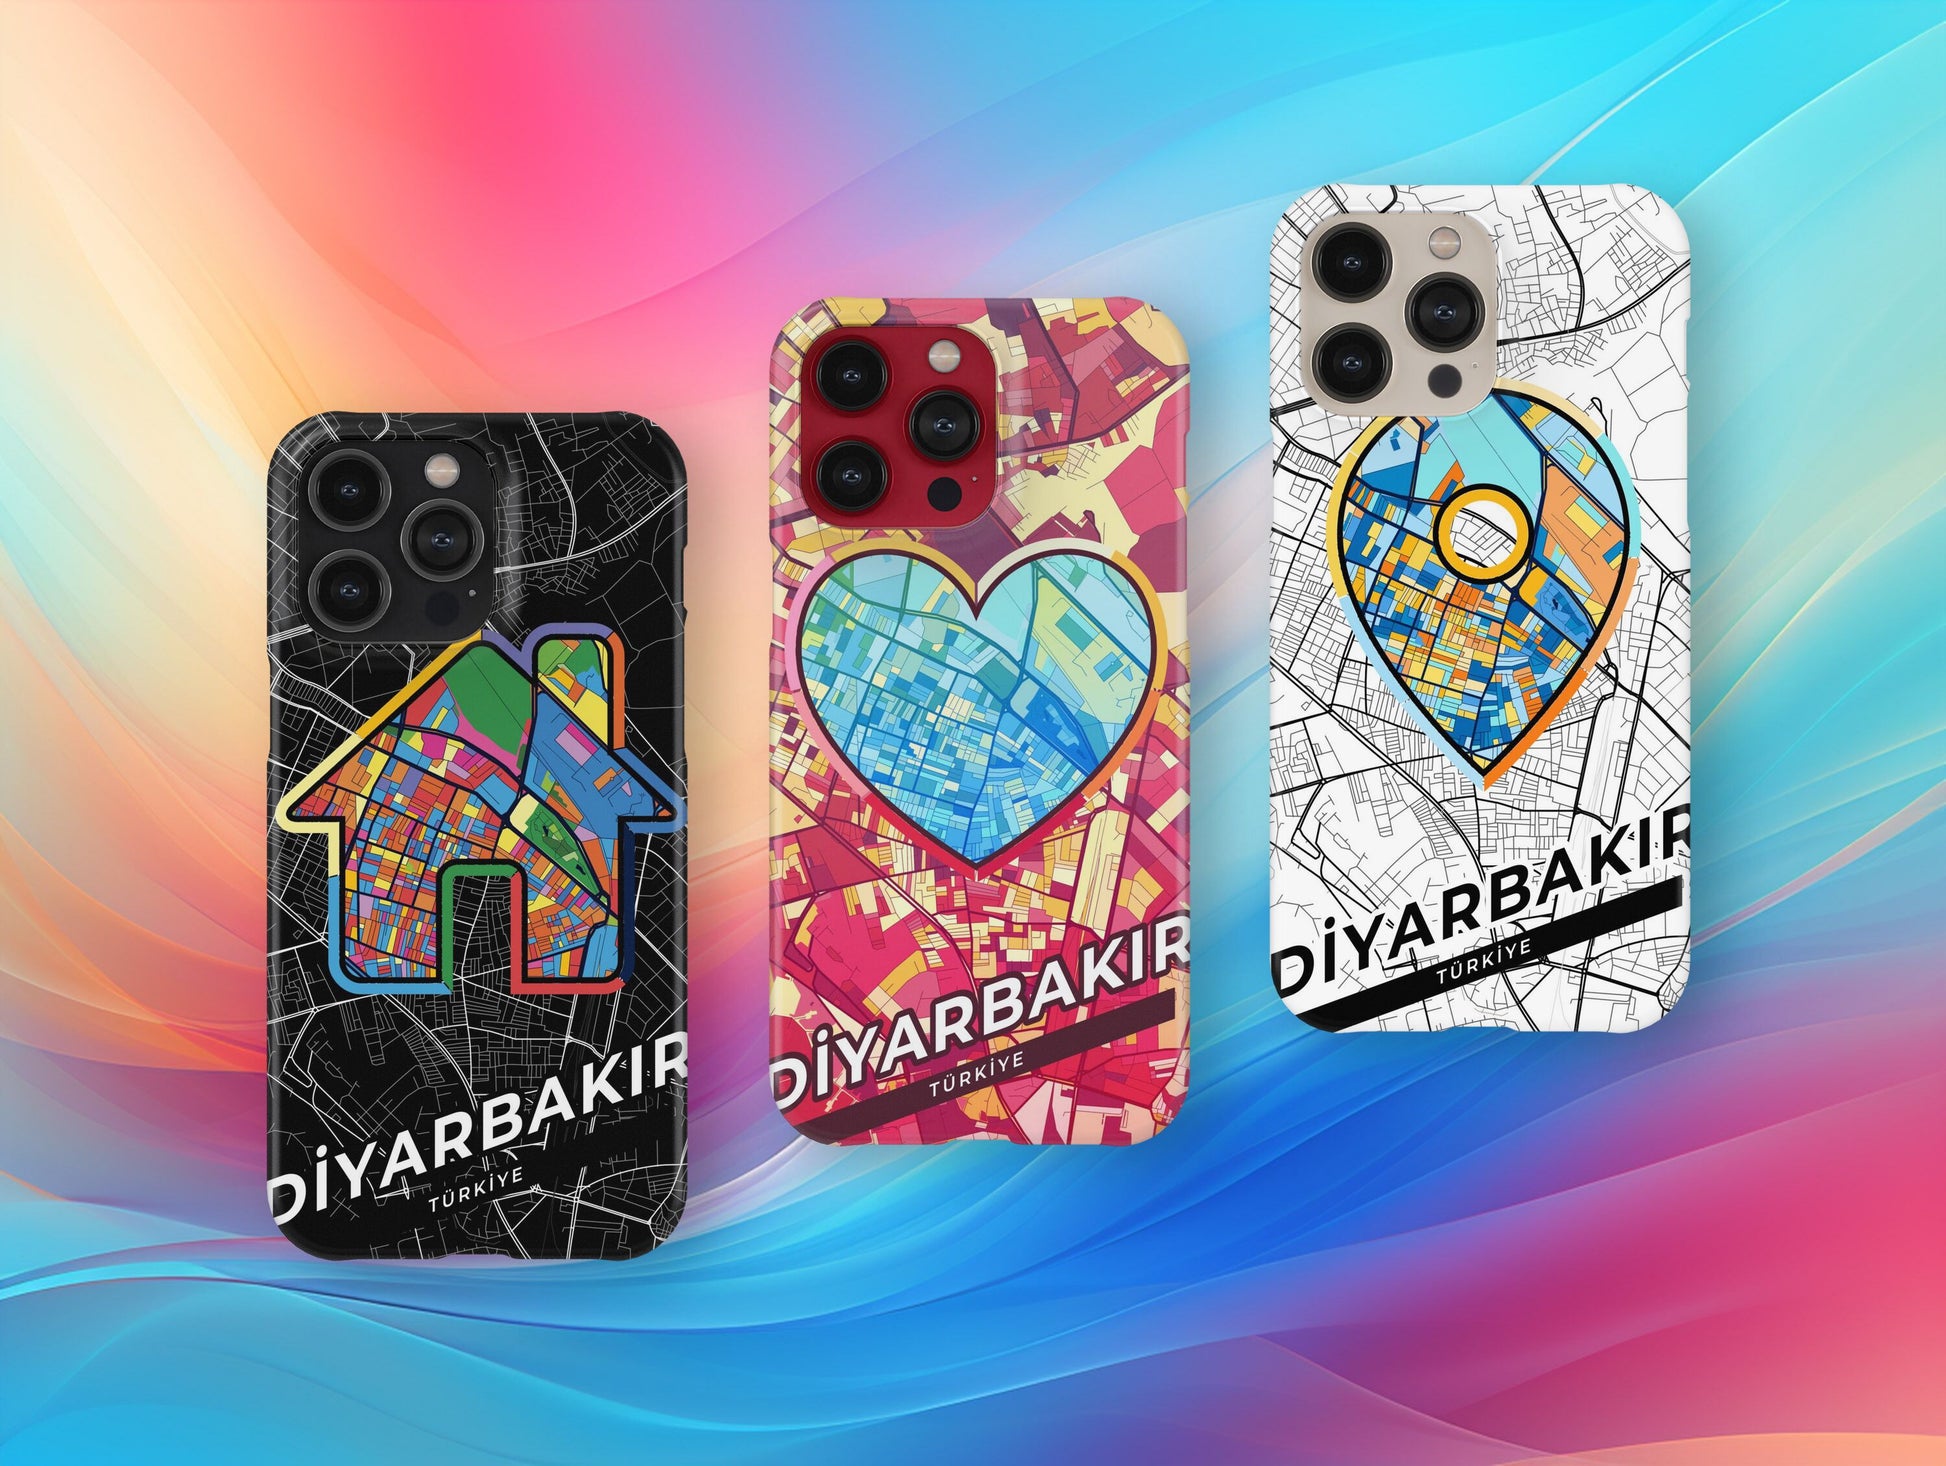 Diyarbakır Turkey slim phone case with colorful icon. Birthday, wedding or housewarming gift. Couple match cases.